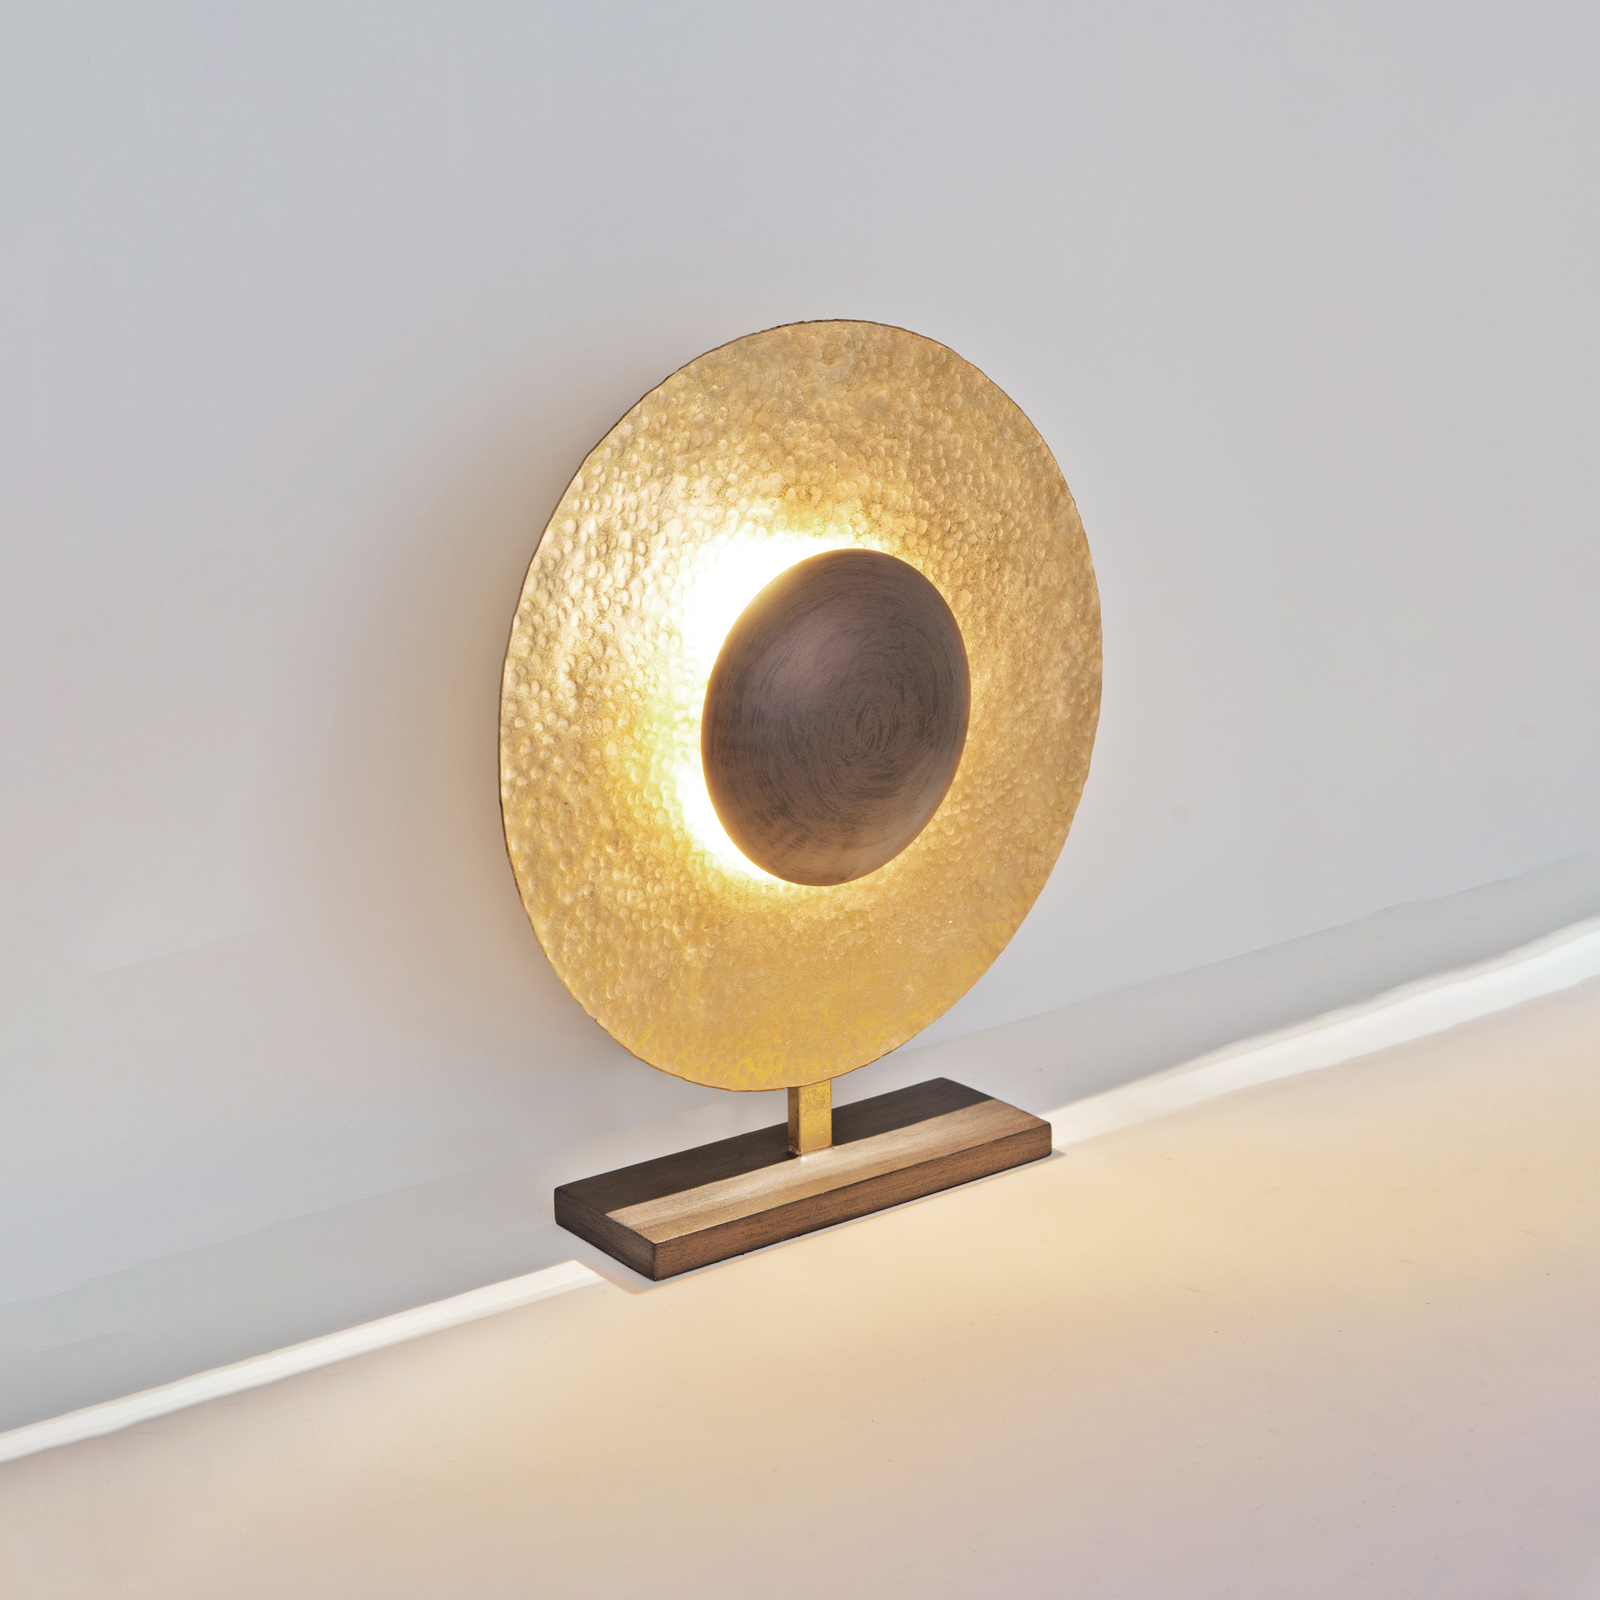 Pöytälamppu Satellite, korkeus 52 cm, kulta/ruskea